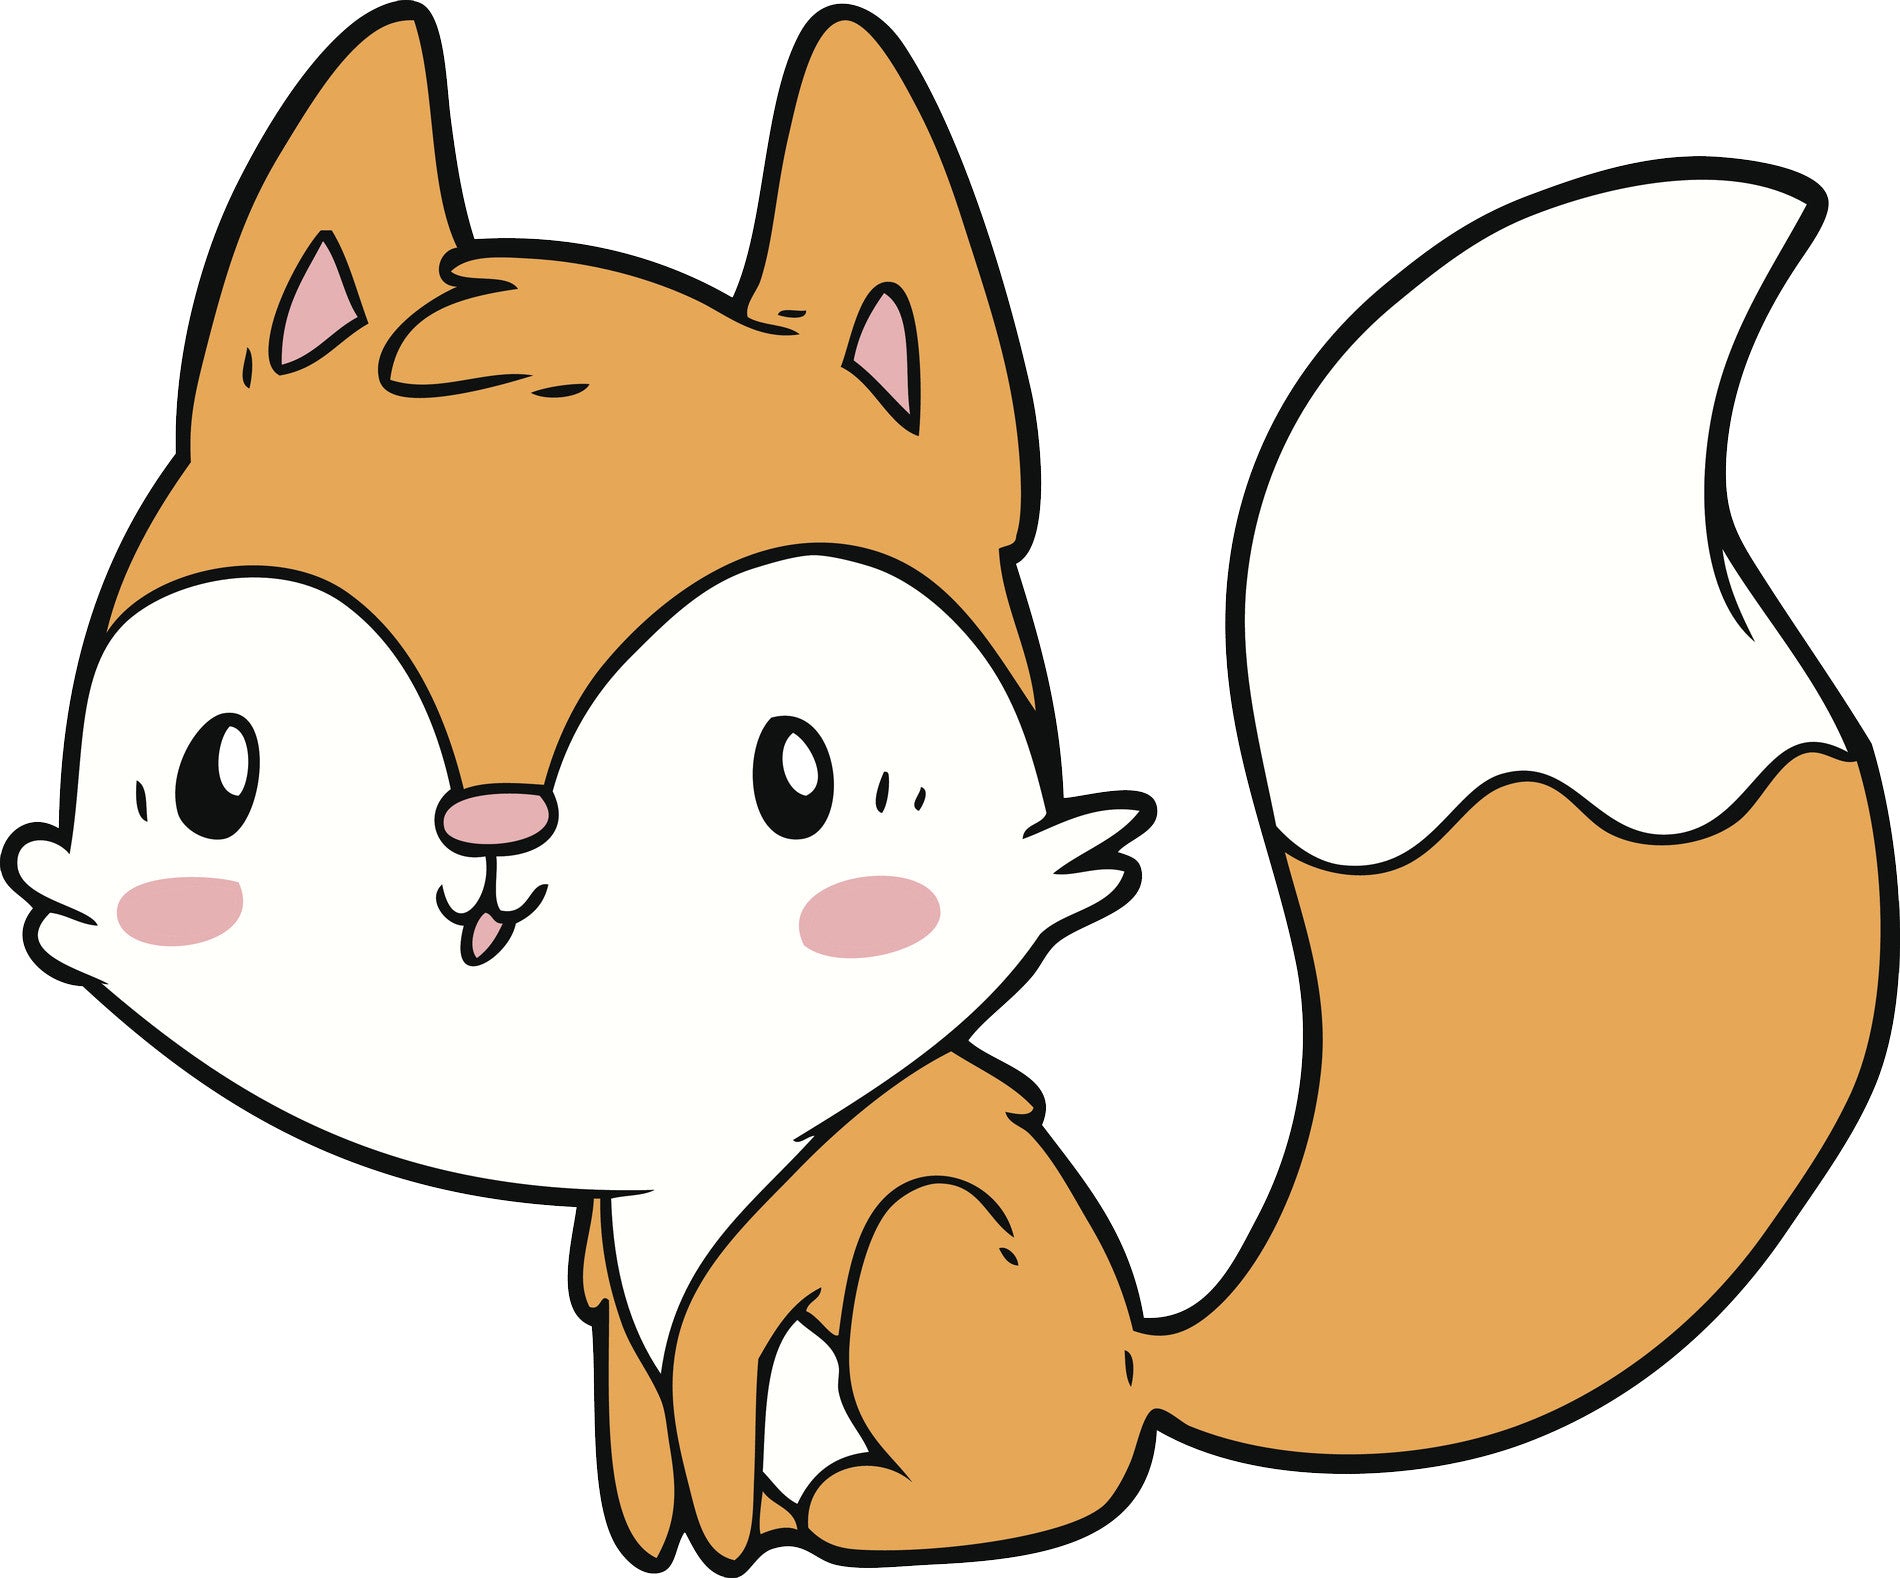 Simple Cute Kawaii Nursery Animal Cartoon - Fox Vinyl Decal Sticker